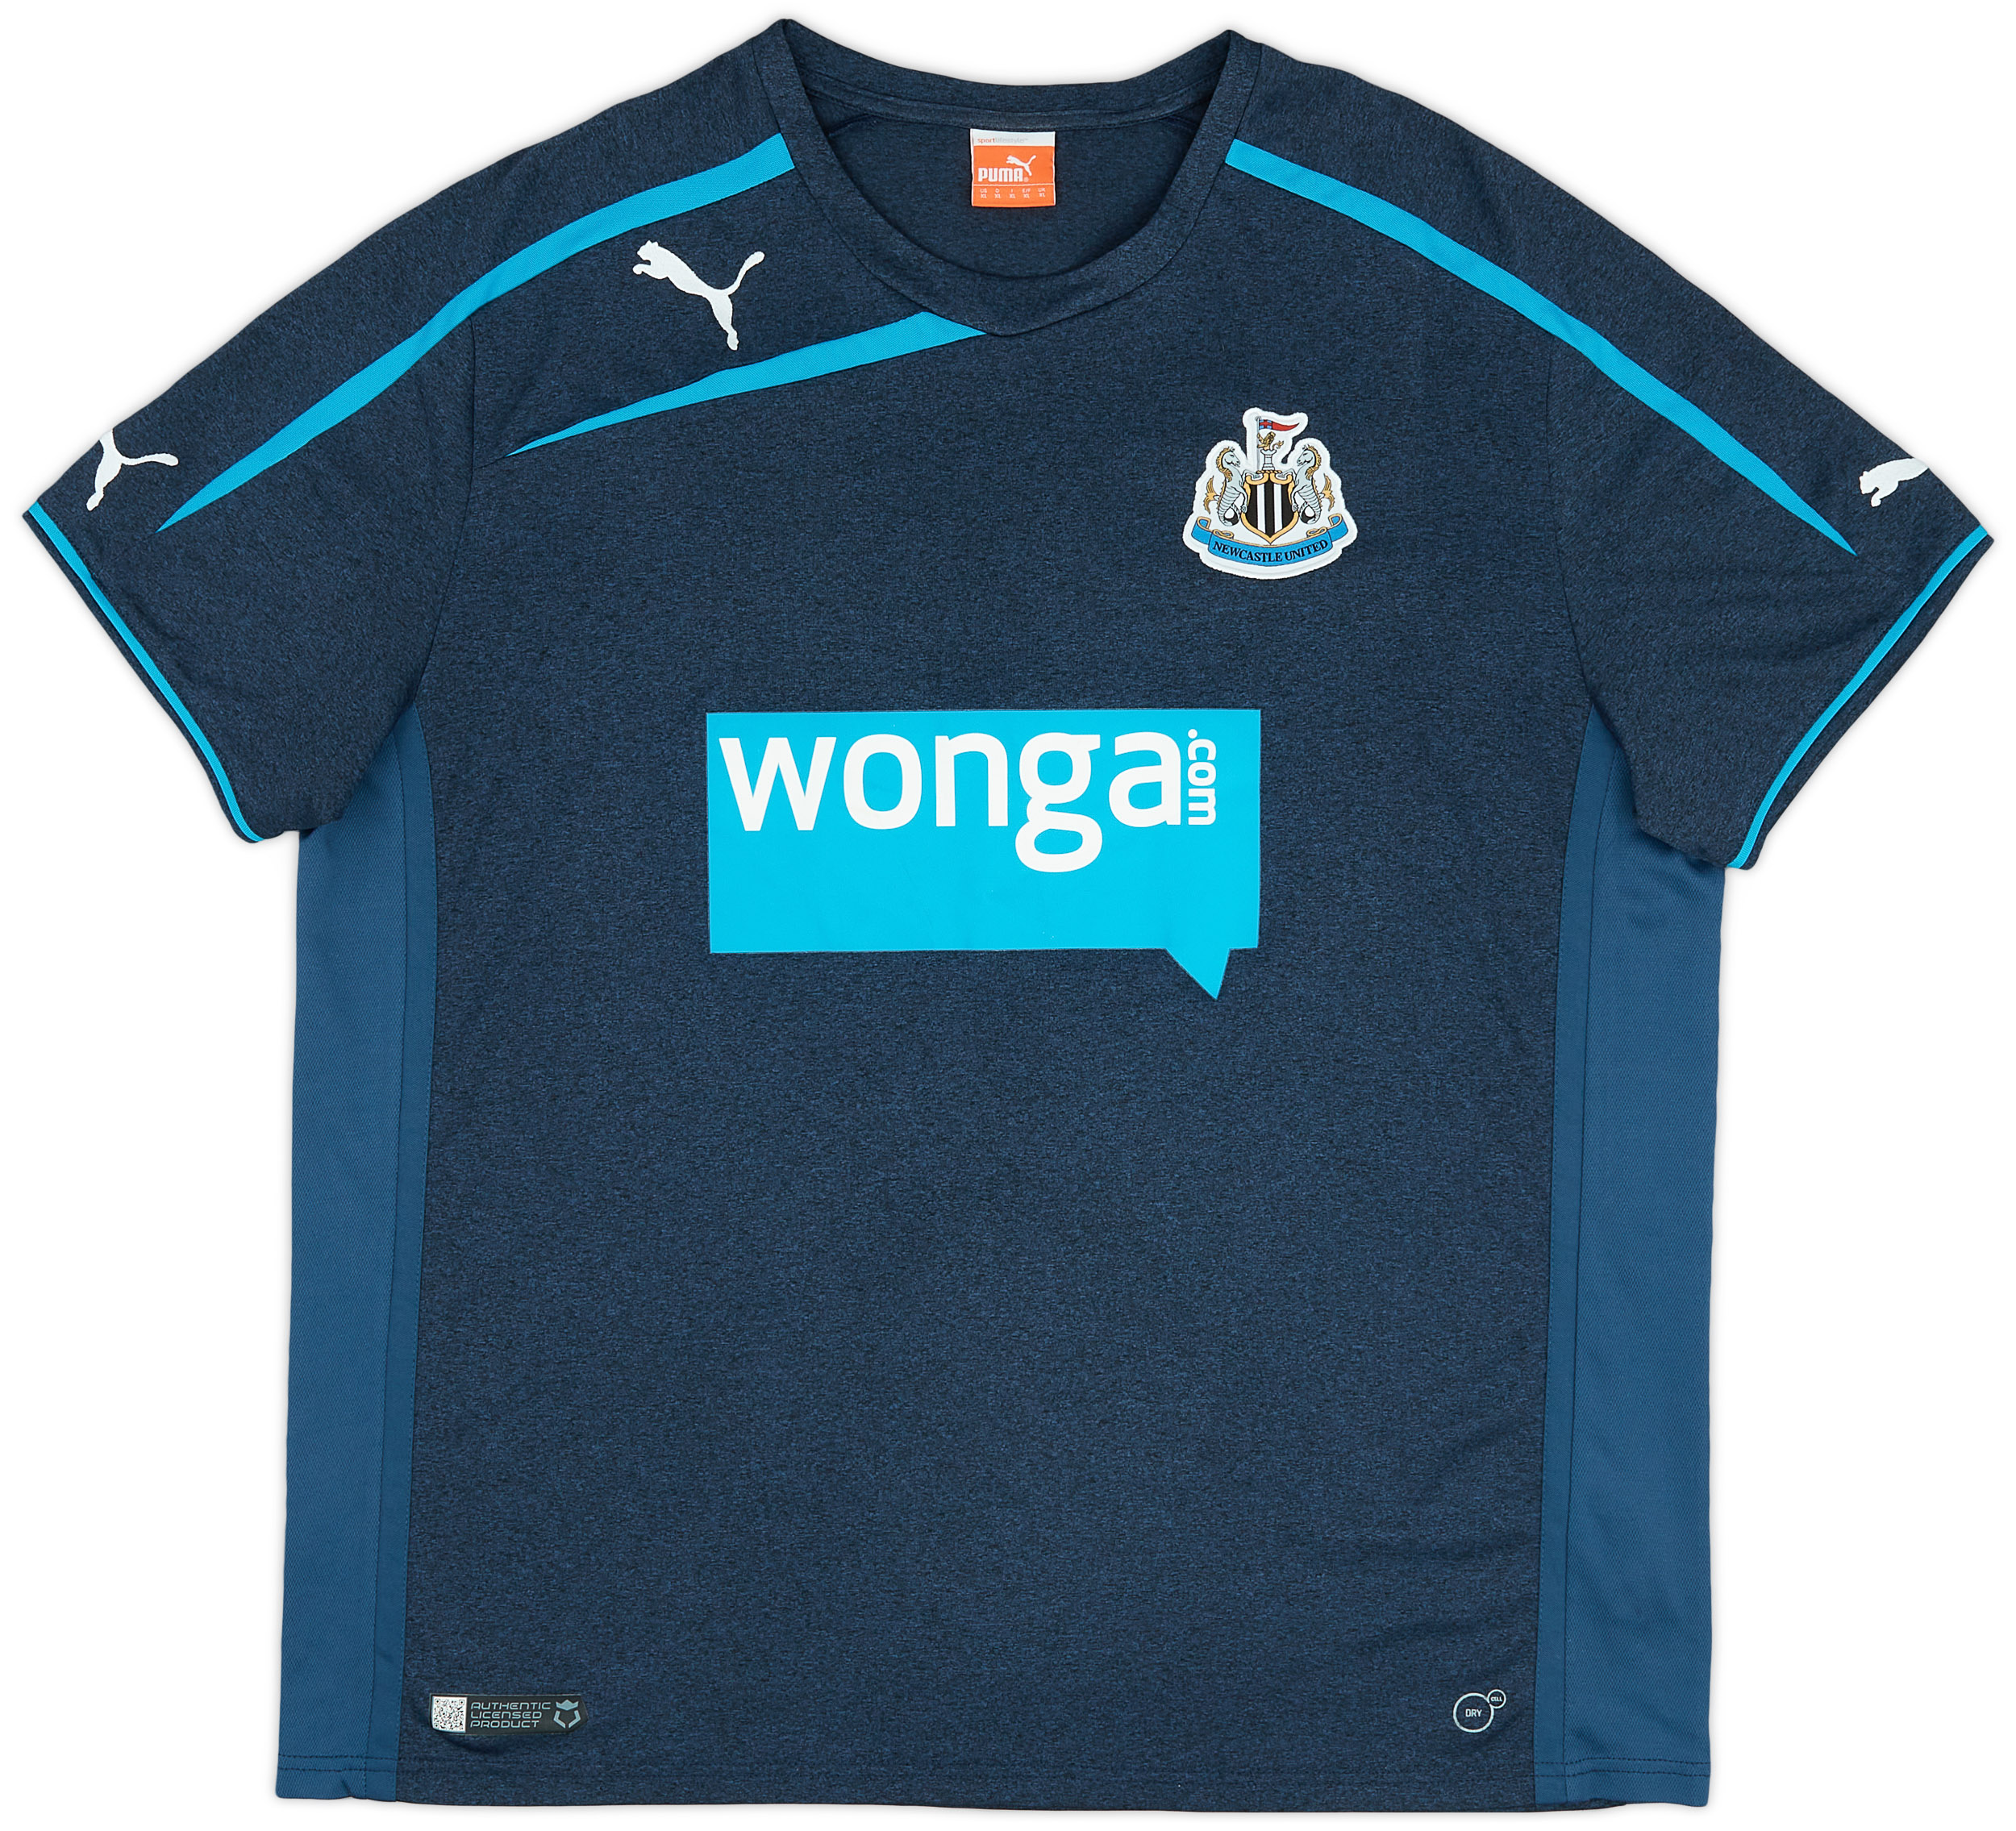 2013-14 Newcastle United Away Shirt - 9/10 - ()